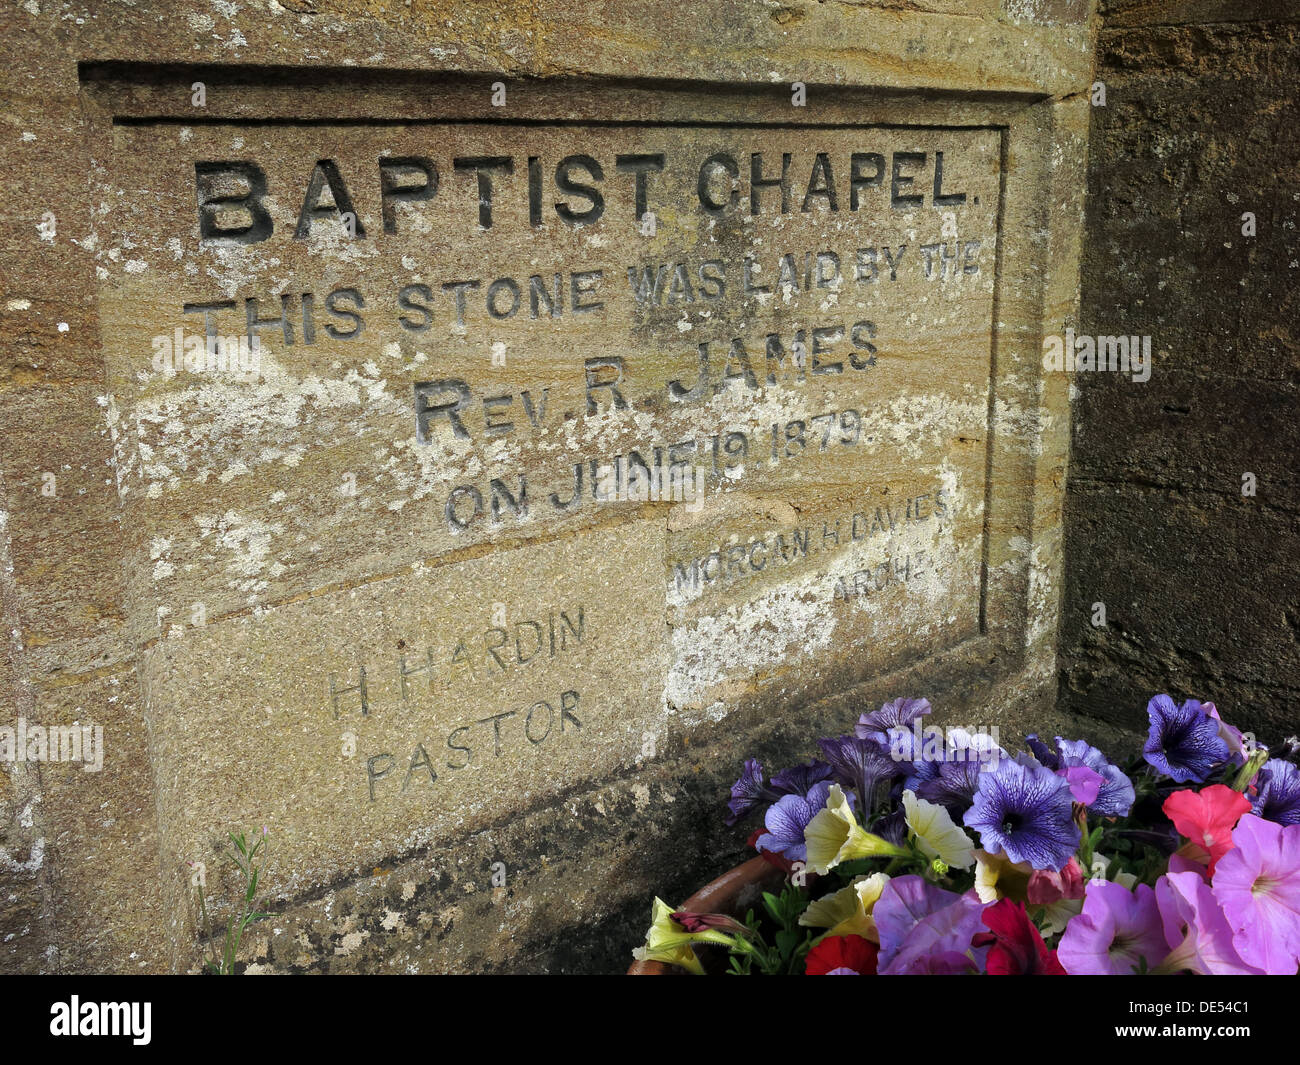 Baptist Chapel Stone, Montecute, Somerset, England, UK Stock Photo